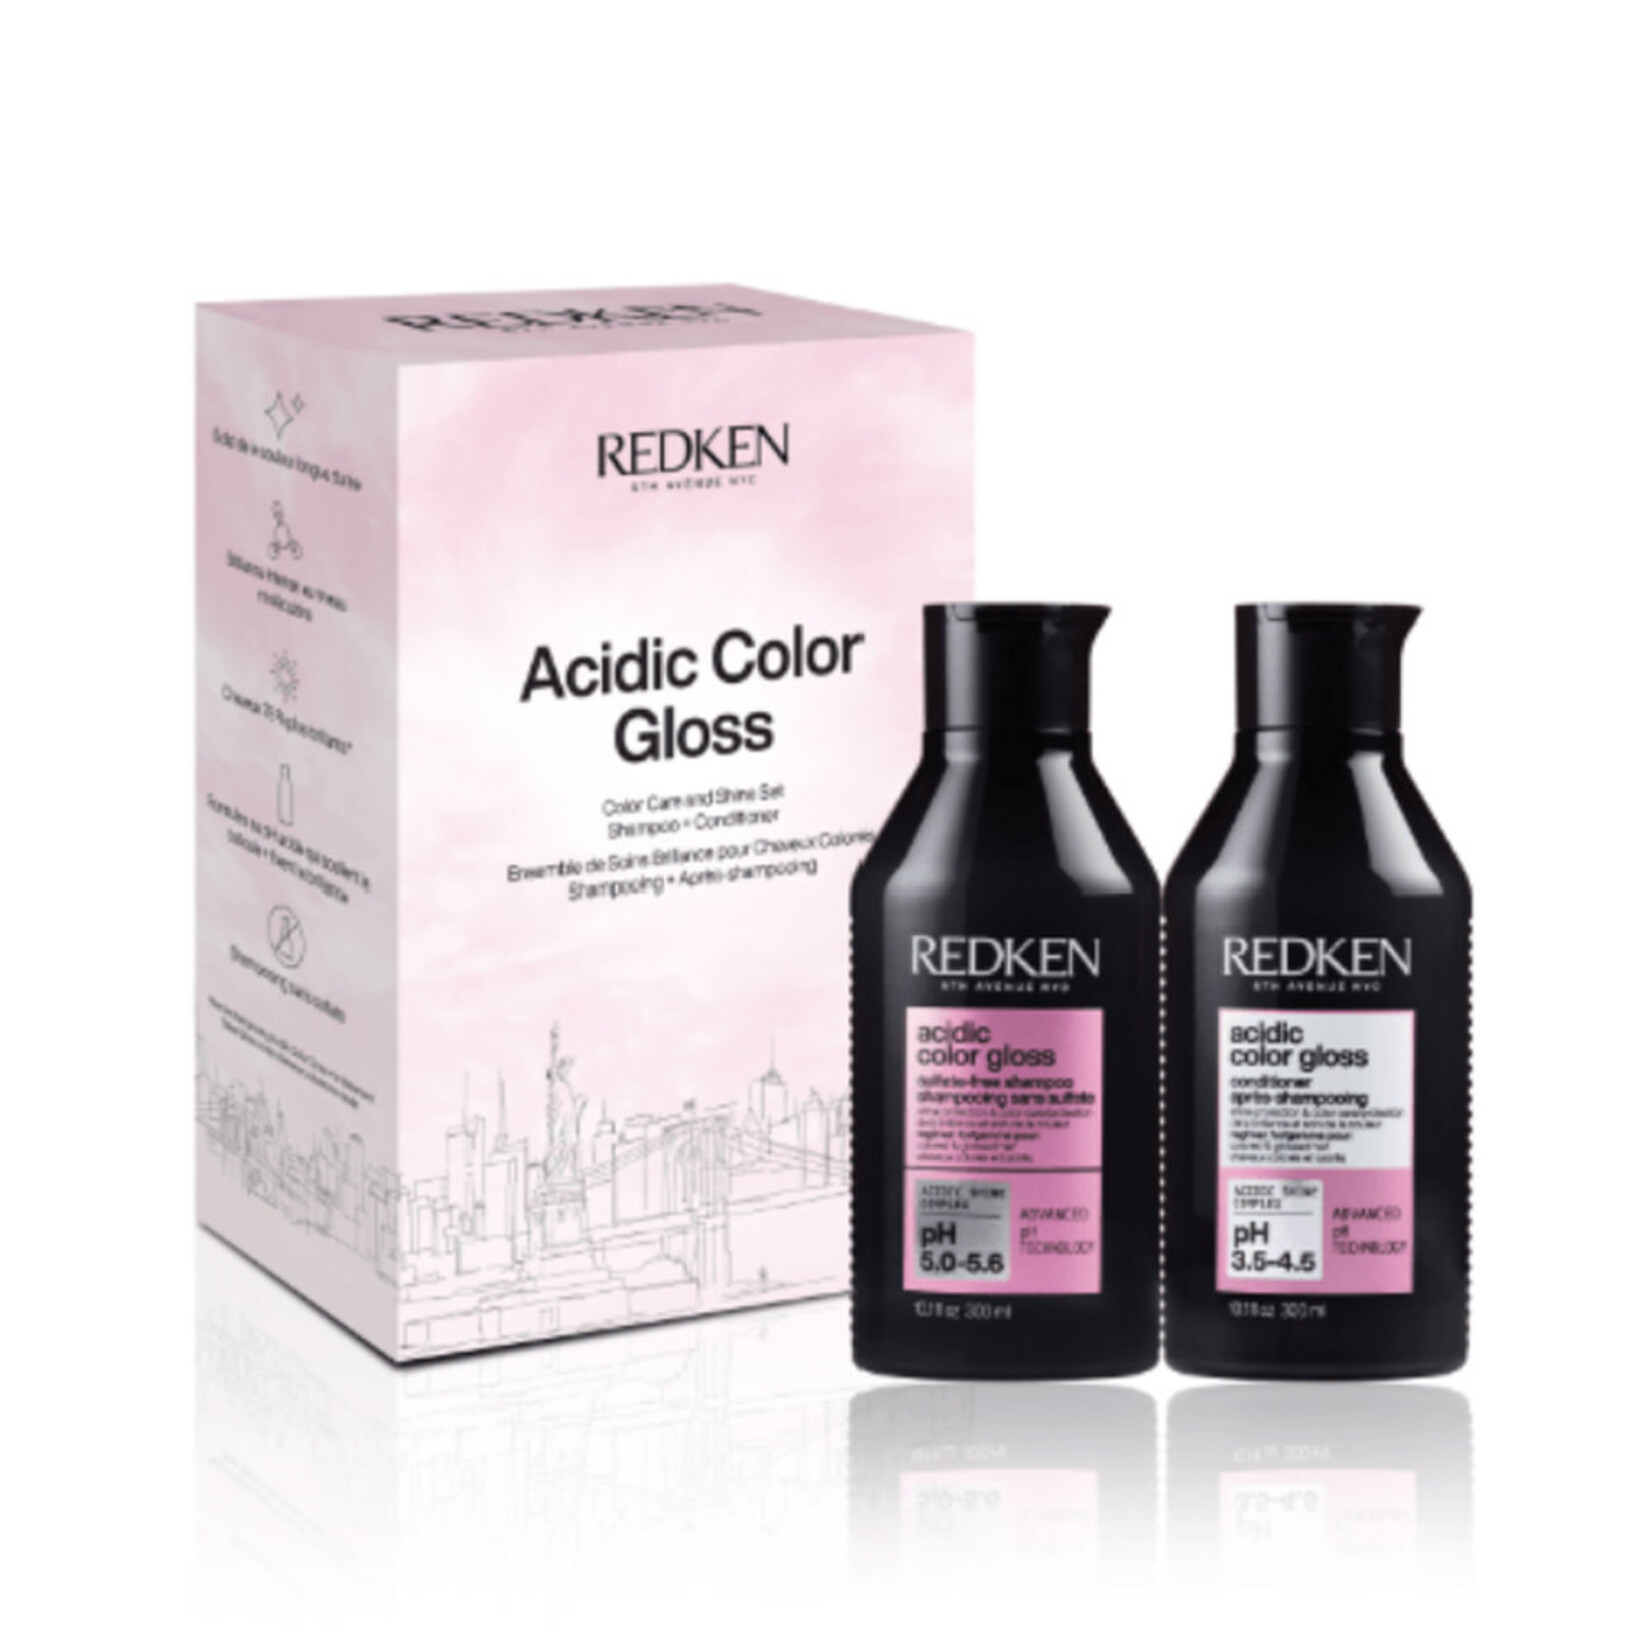 Redken Redken - Duo printemps - Acidic color gloss